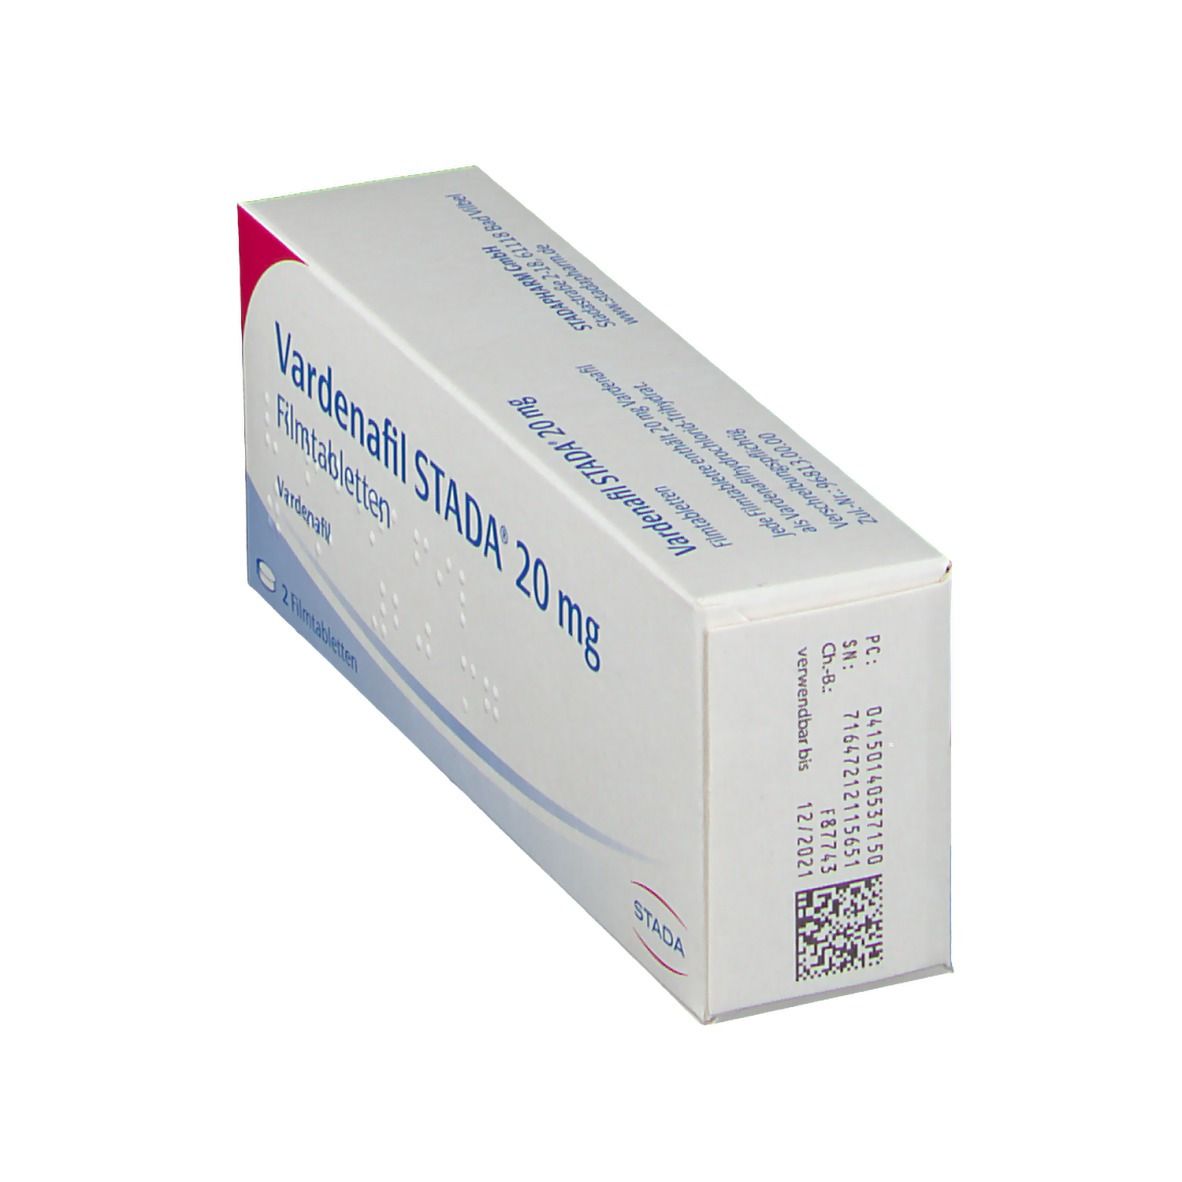 Vardenafil STADA® 20 mg